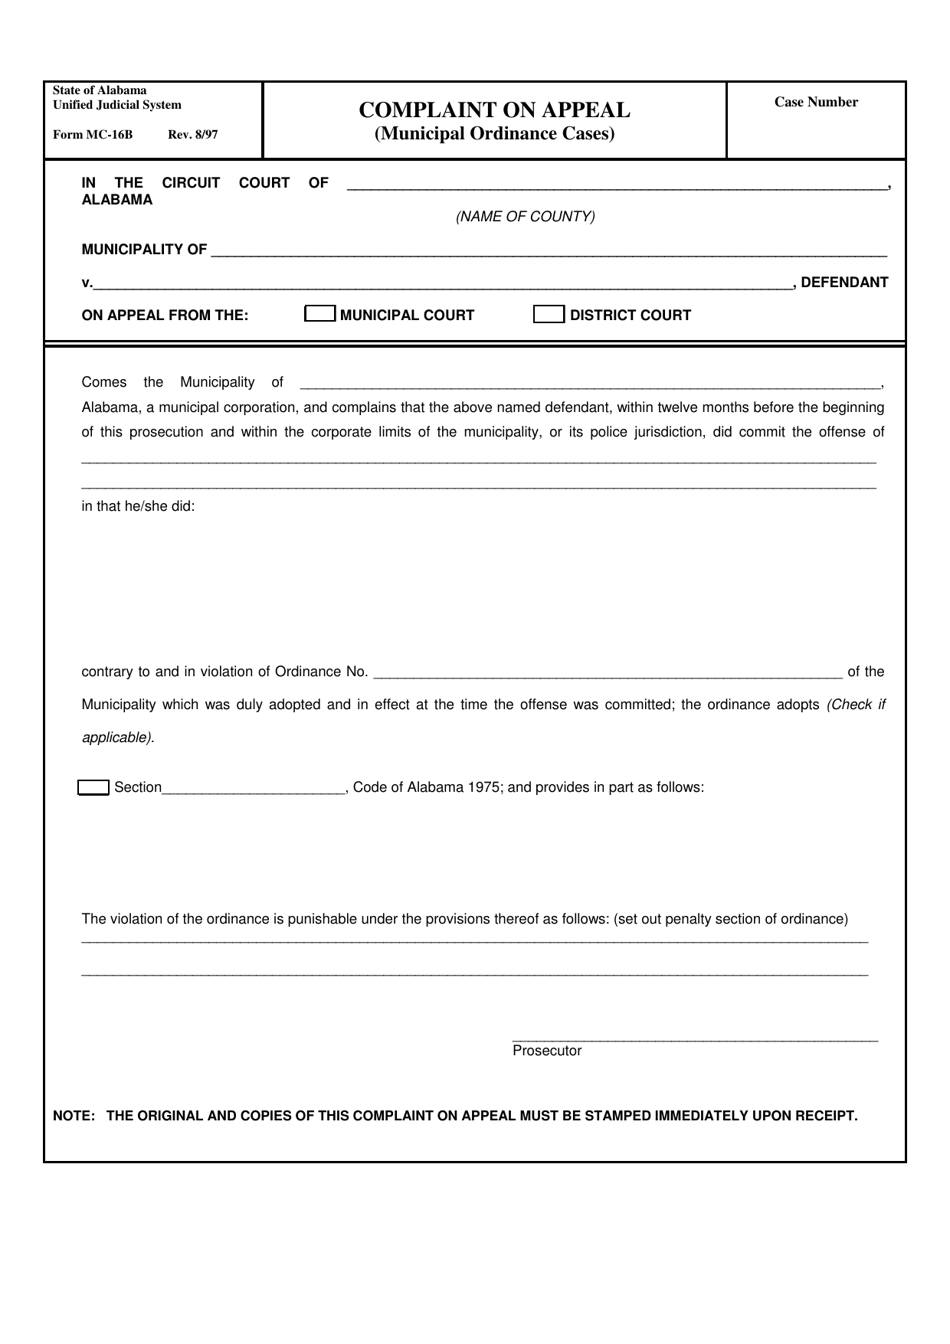 Form MC-16B Complaint on Appeal (Municipal Ordinance Cases) - Alabama, Page 1